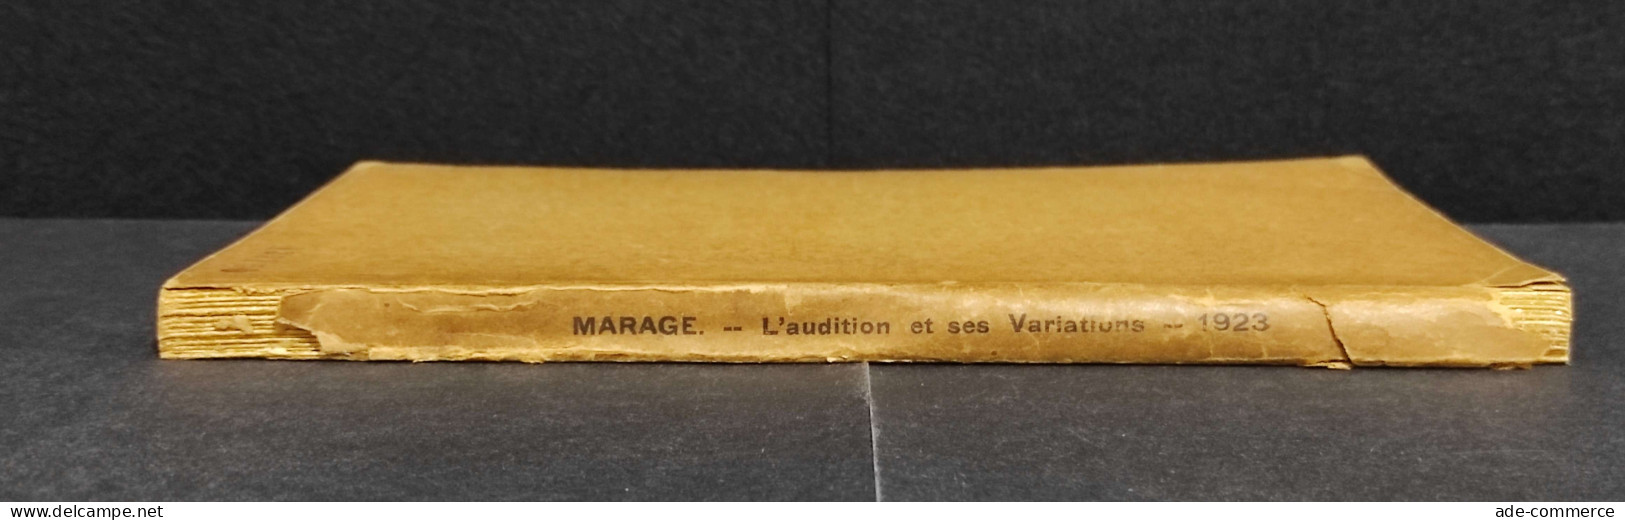 L'Audition Et Ses Variantions - Marage -Ed. Gauthier-Villars - 1923 - Matemáticas Y Física